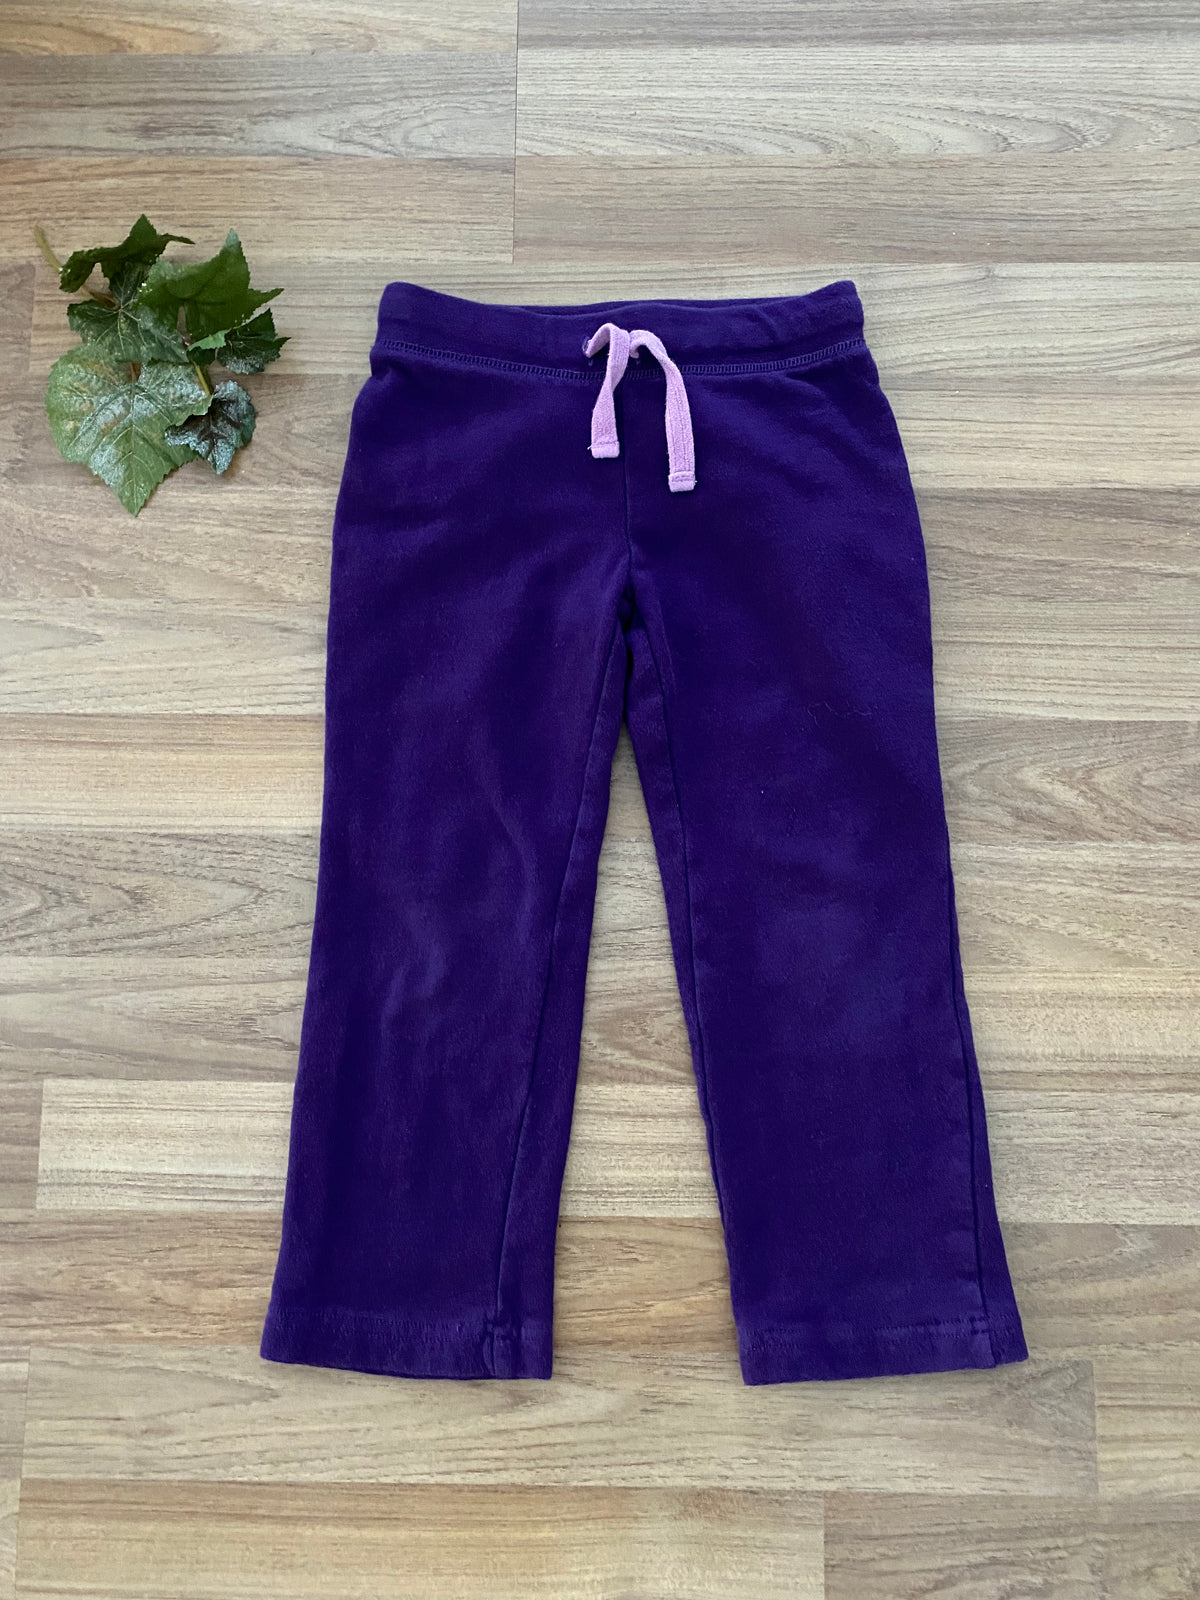 Pull Drawstring Pants (Girls Size 4)